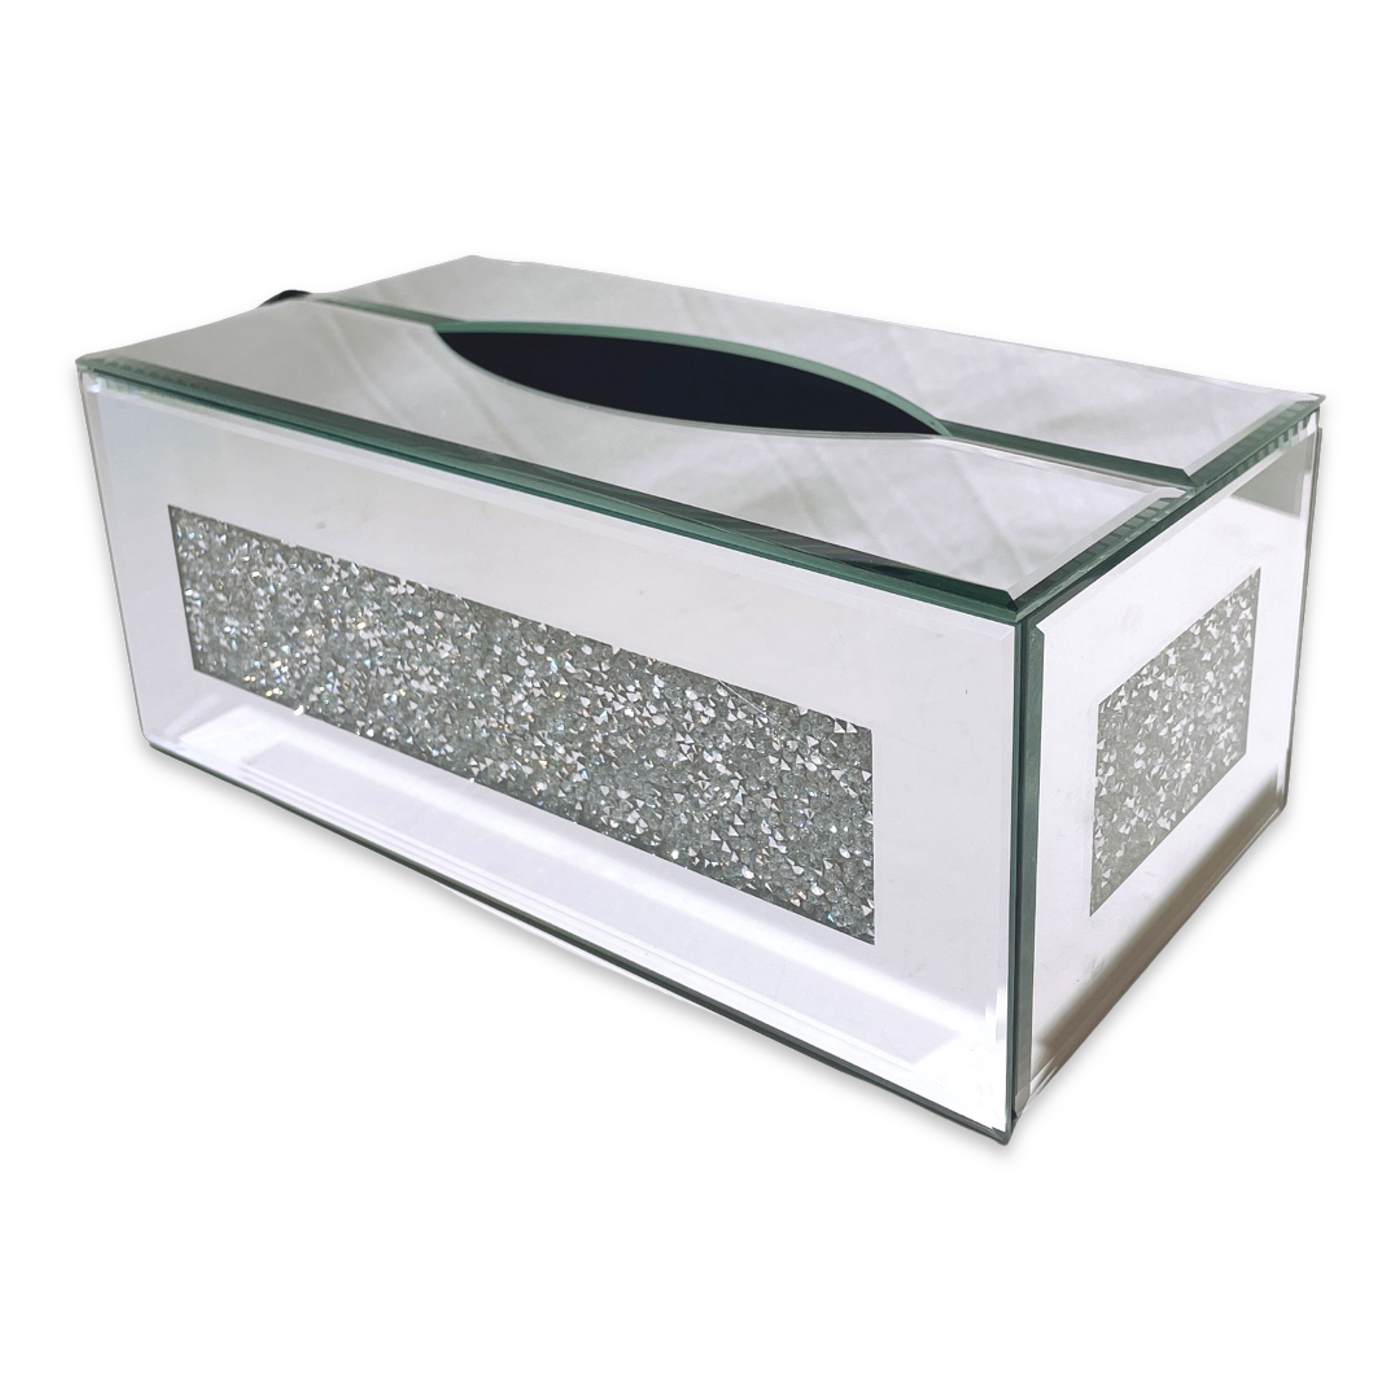 Mirrored tissue box